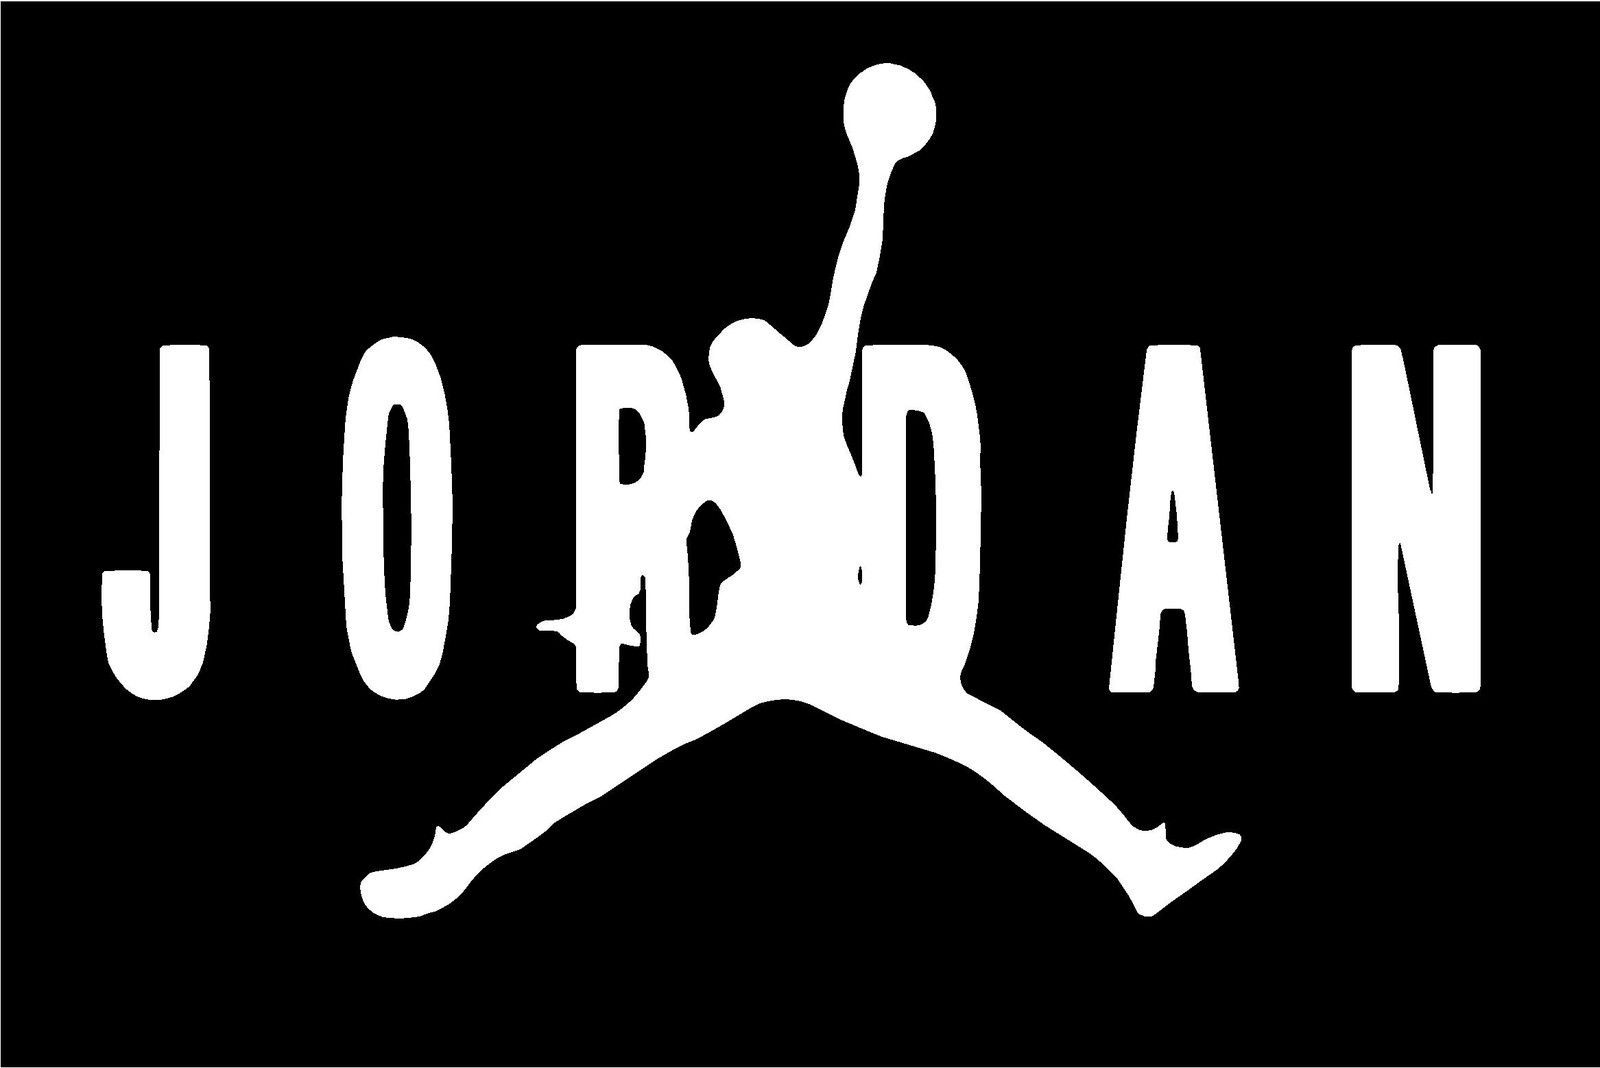 jordan black logo